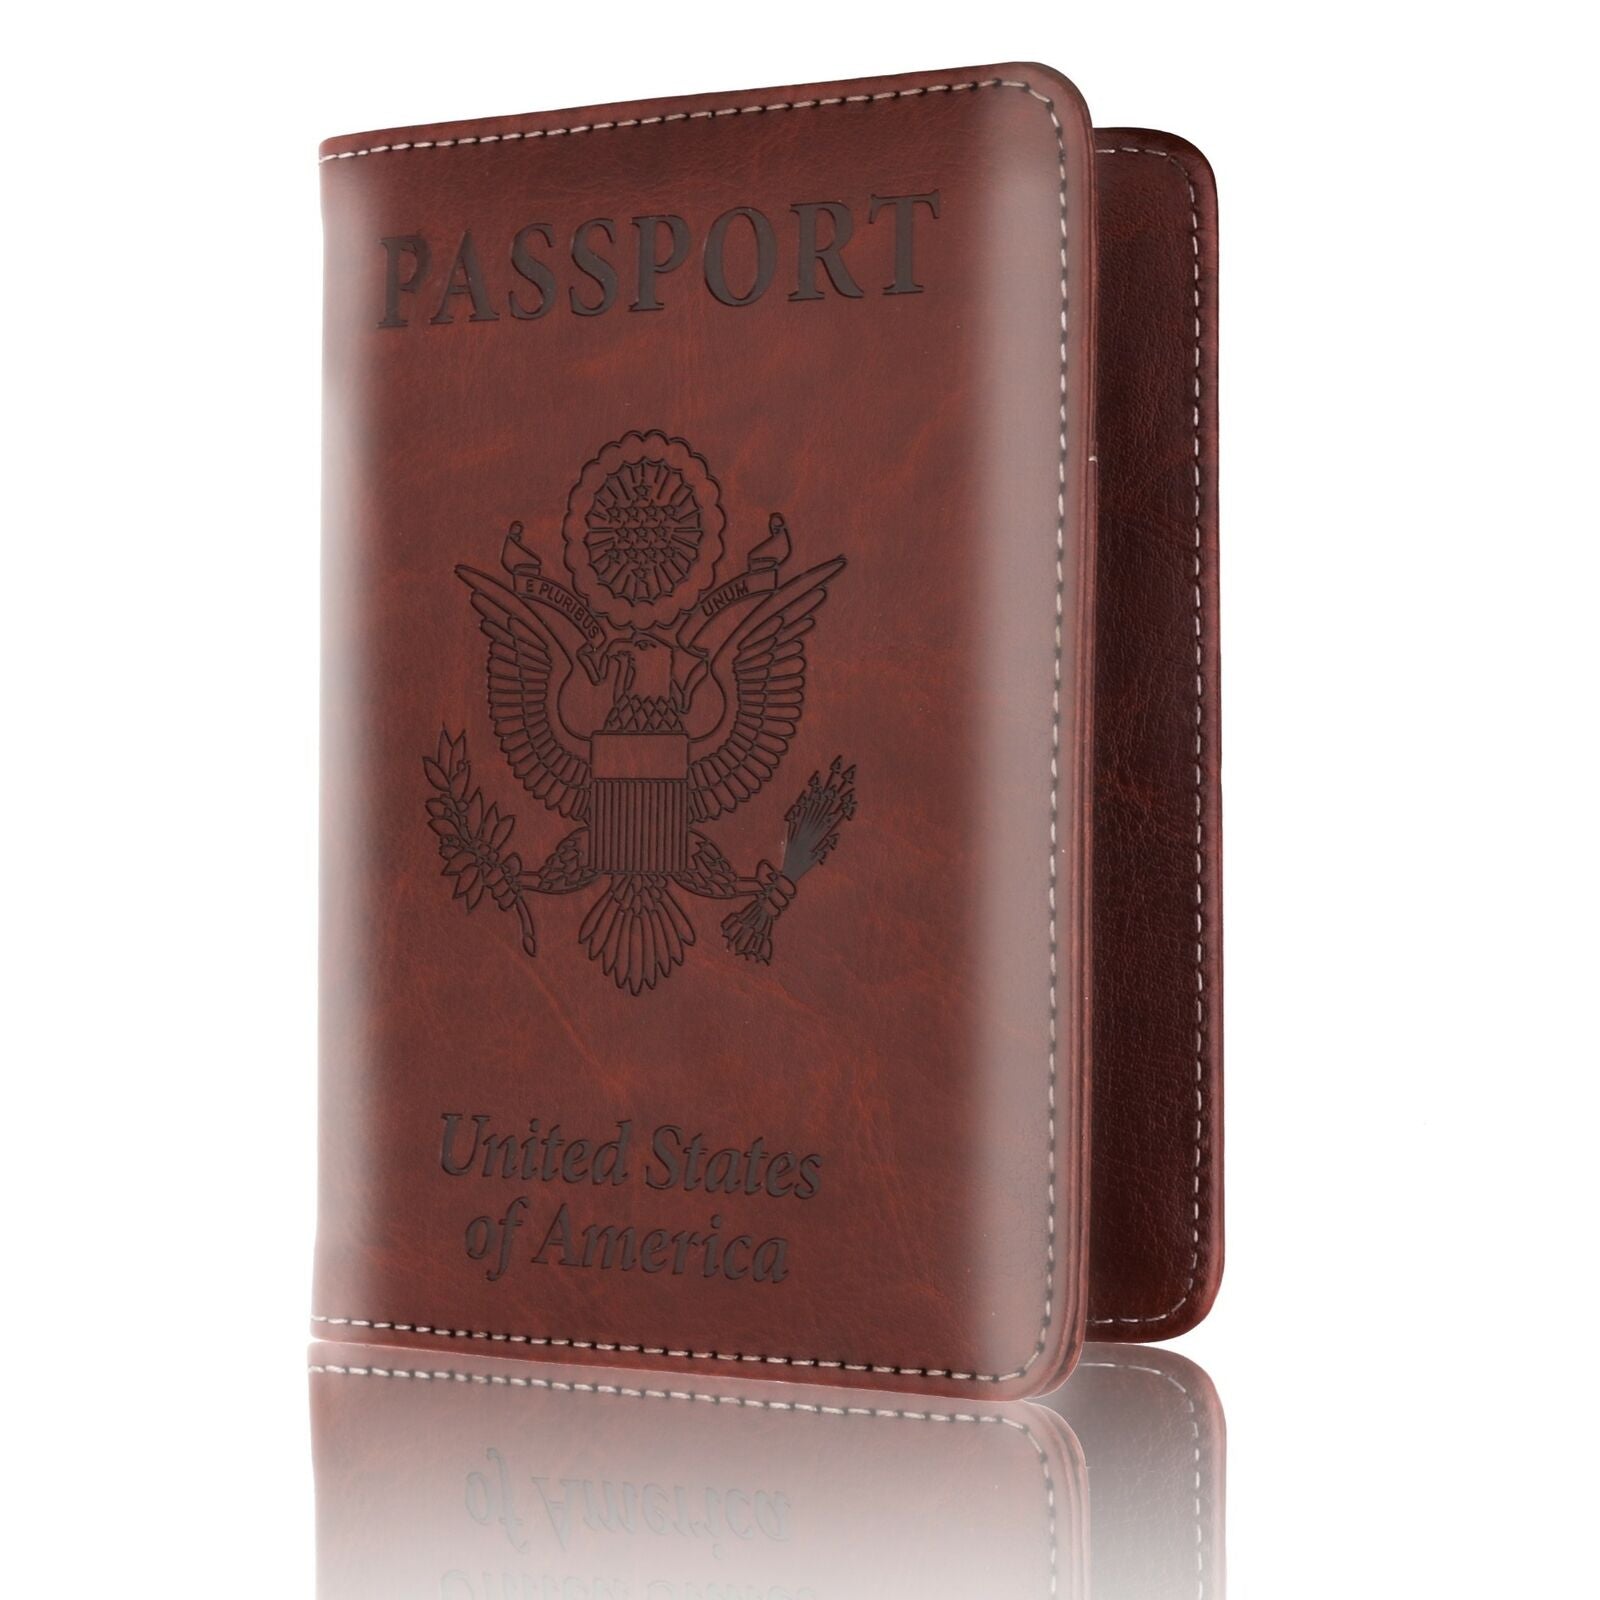 Wallet Holder Slim Leather Travel Passport RFID Blocking ID Card Case Cover 